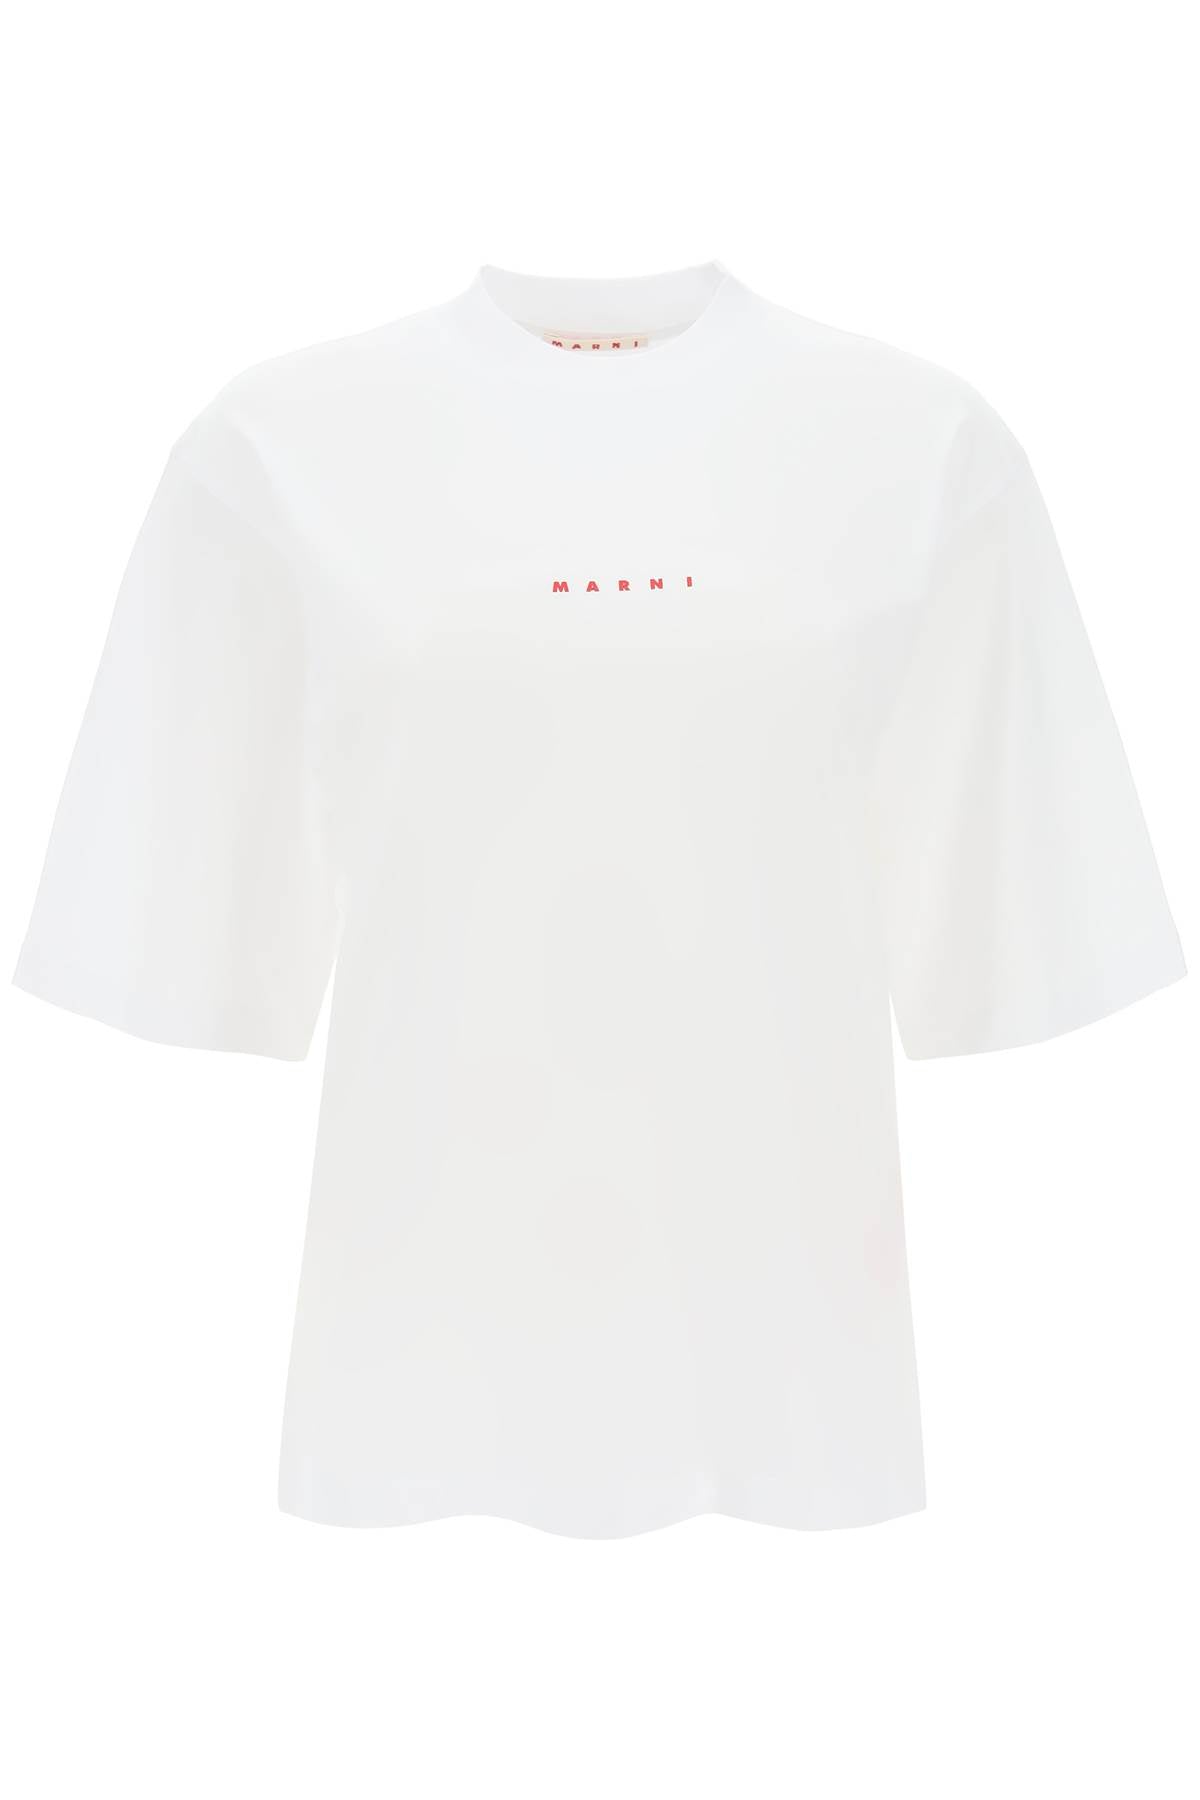 Marni organic cotton t-shirt-0